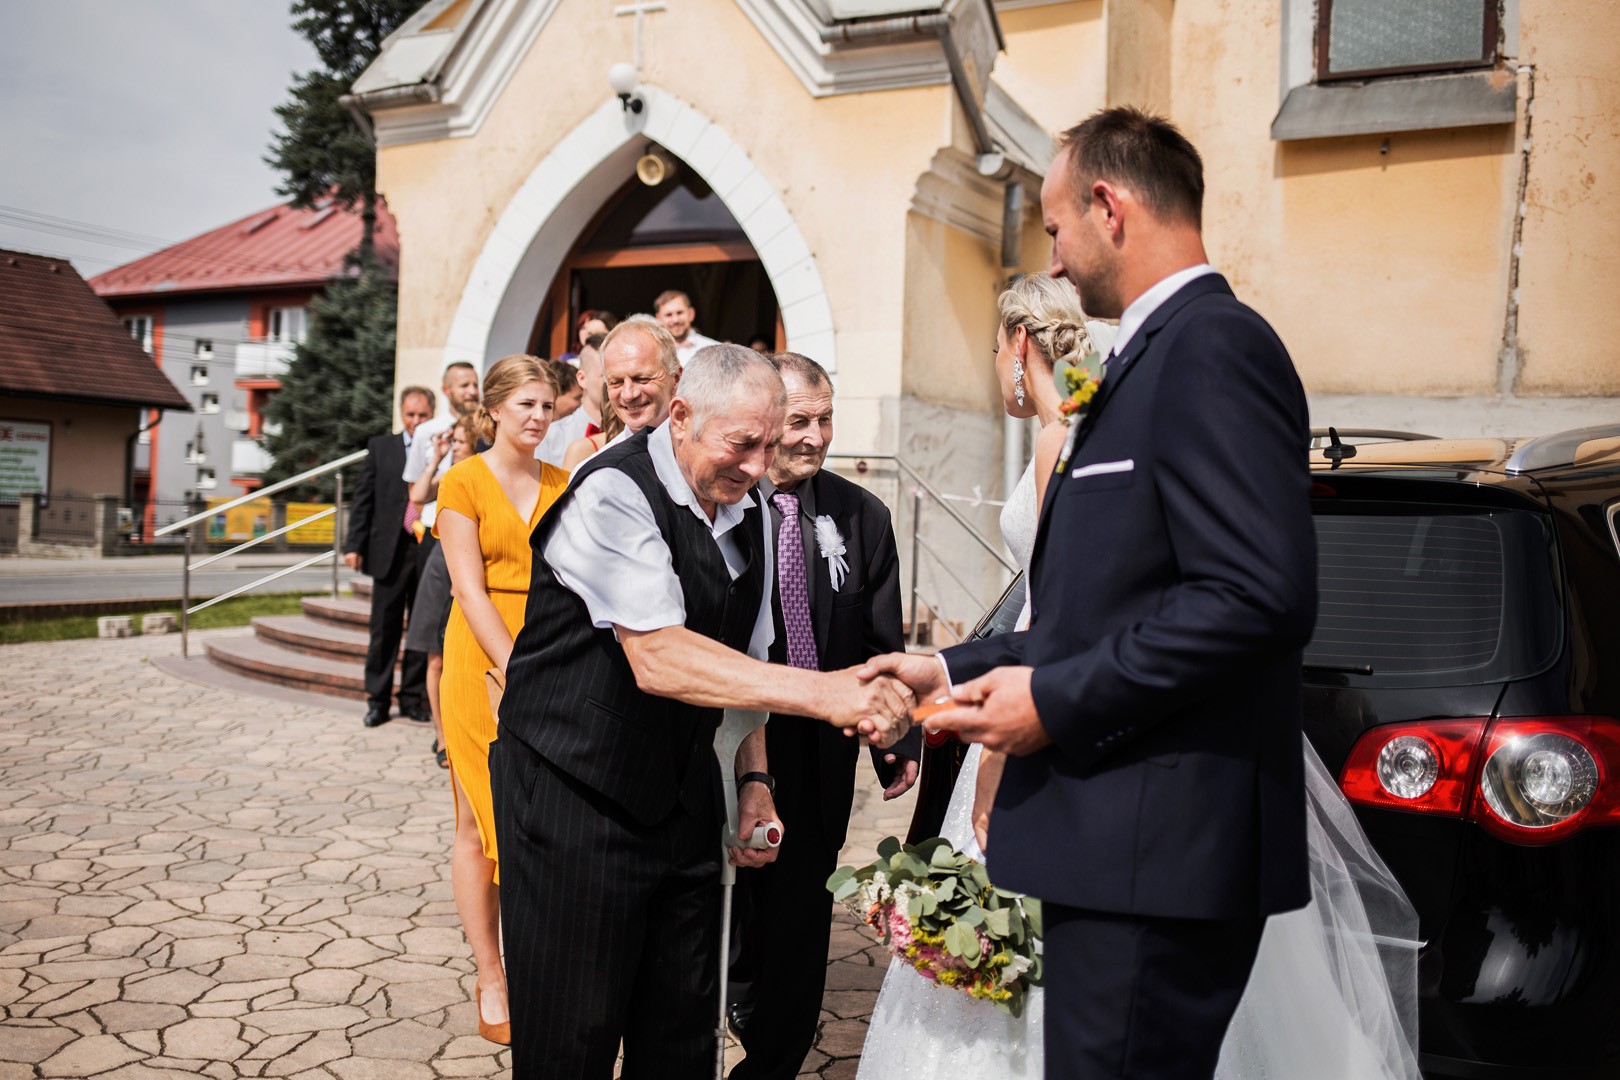 Wedding photos from the wedding day of Miška and Stanka. - 0332.jpg